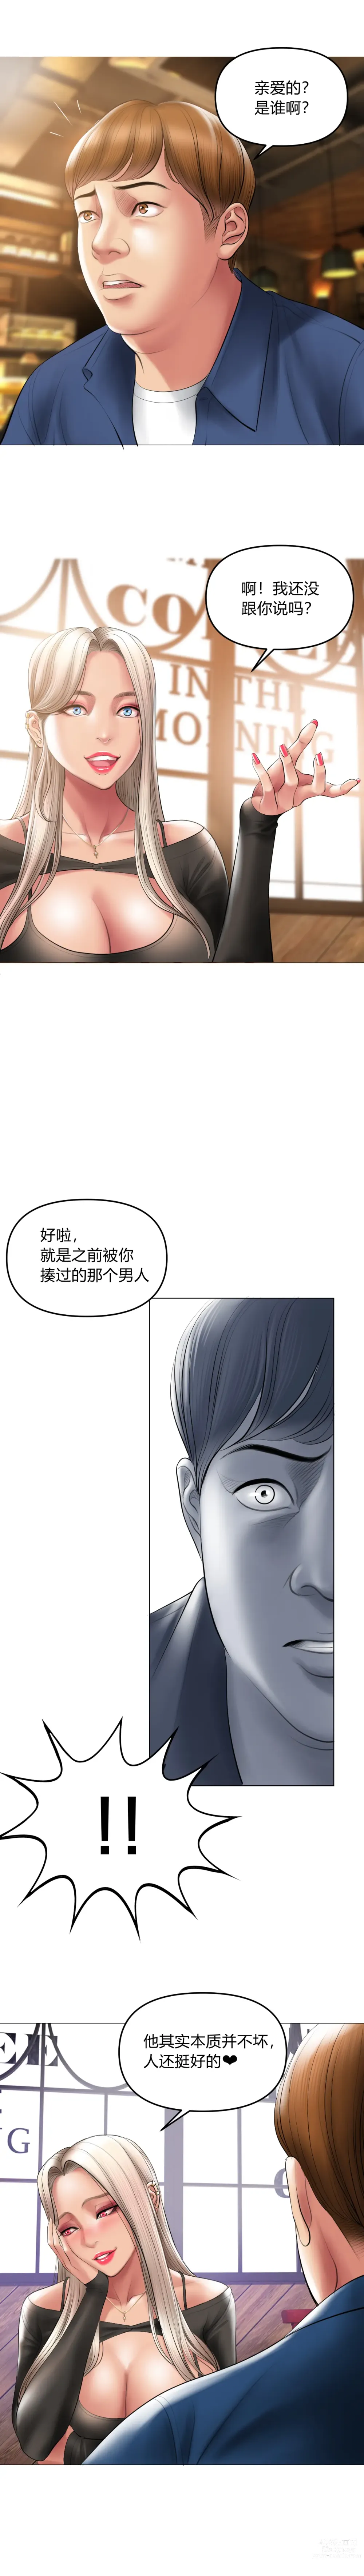 Page 133 of doujinshi 催眠烟